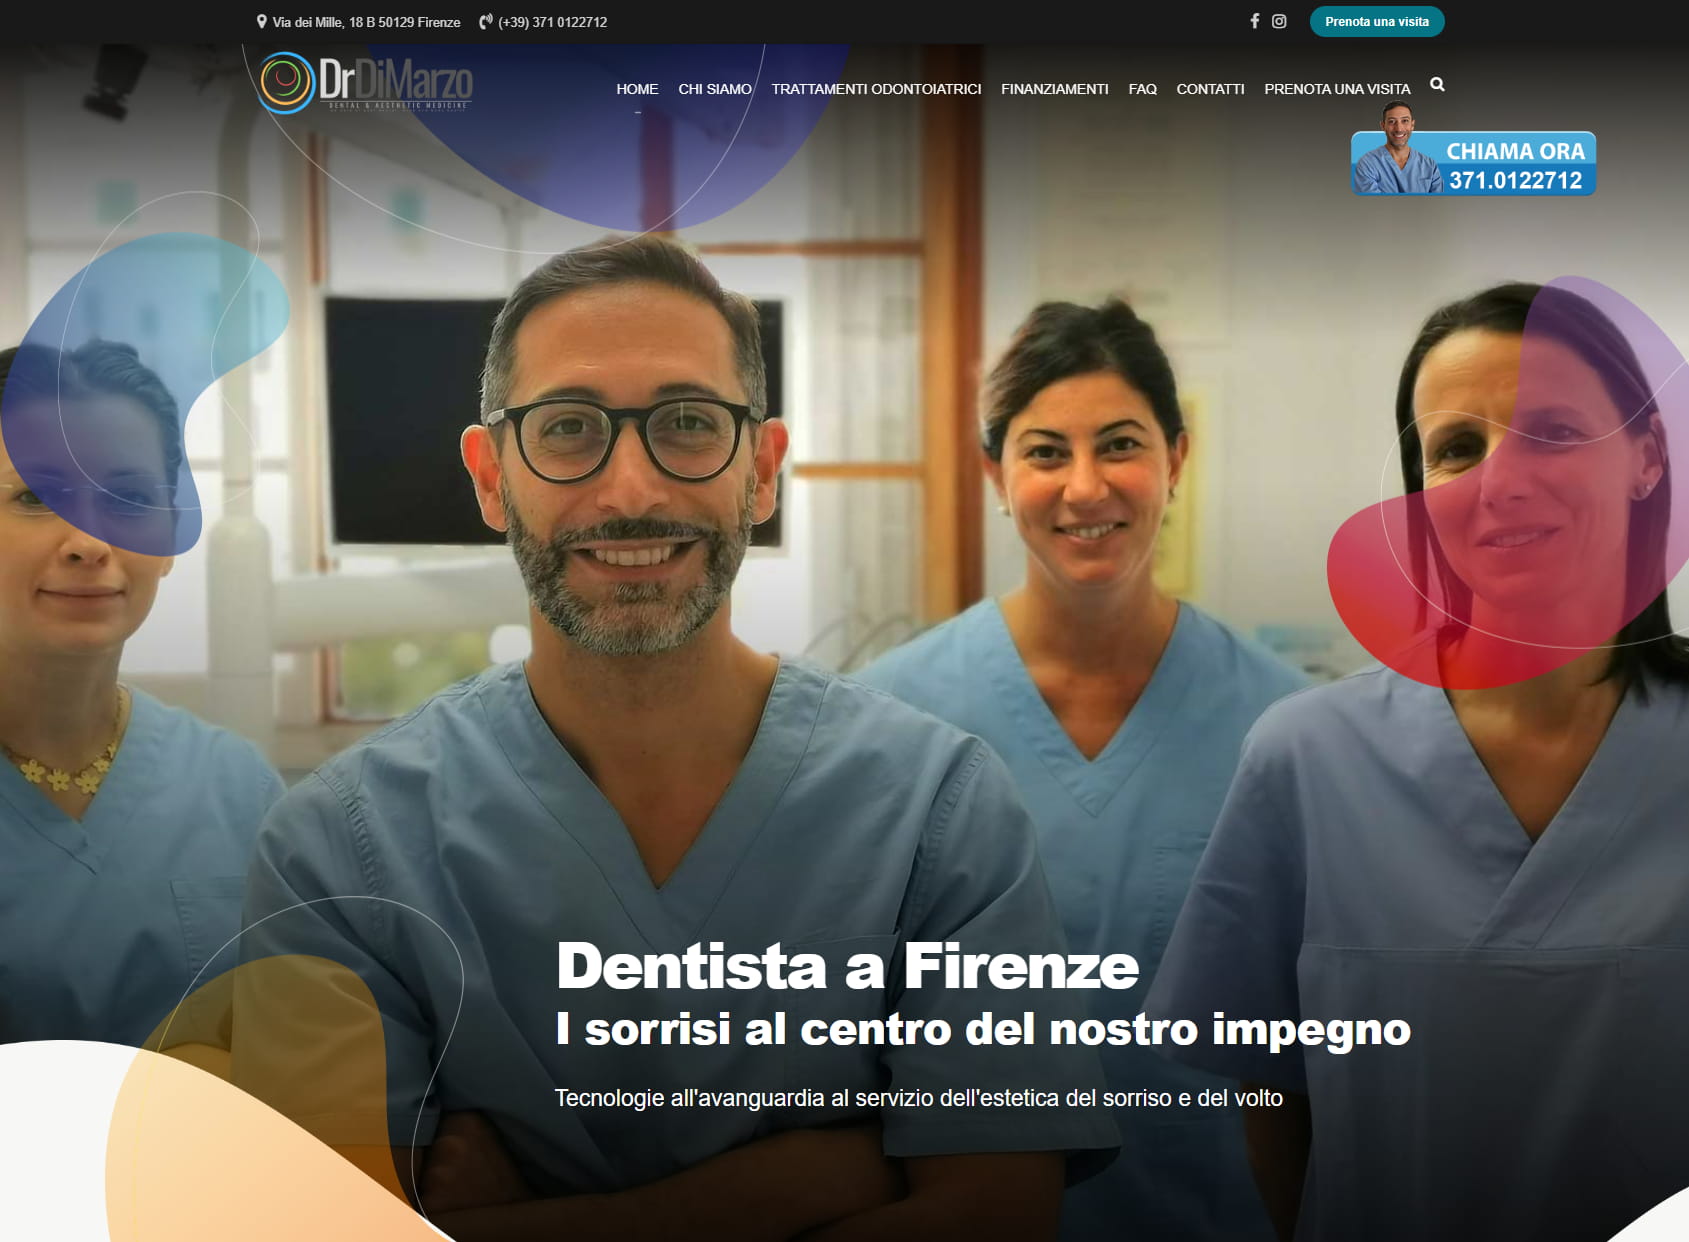 Dr Di Marzo dental & aesthetic medicine